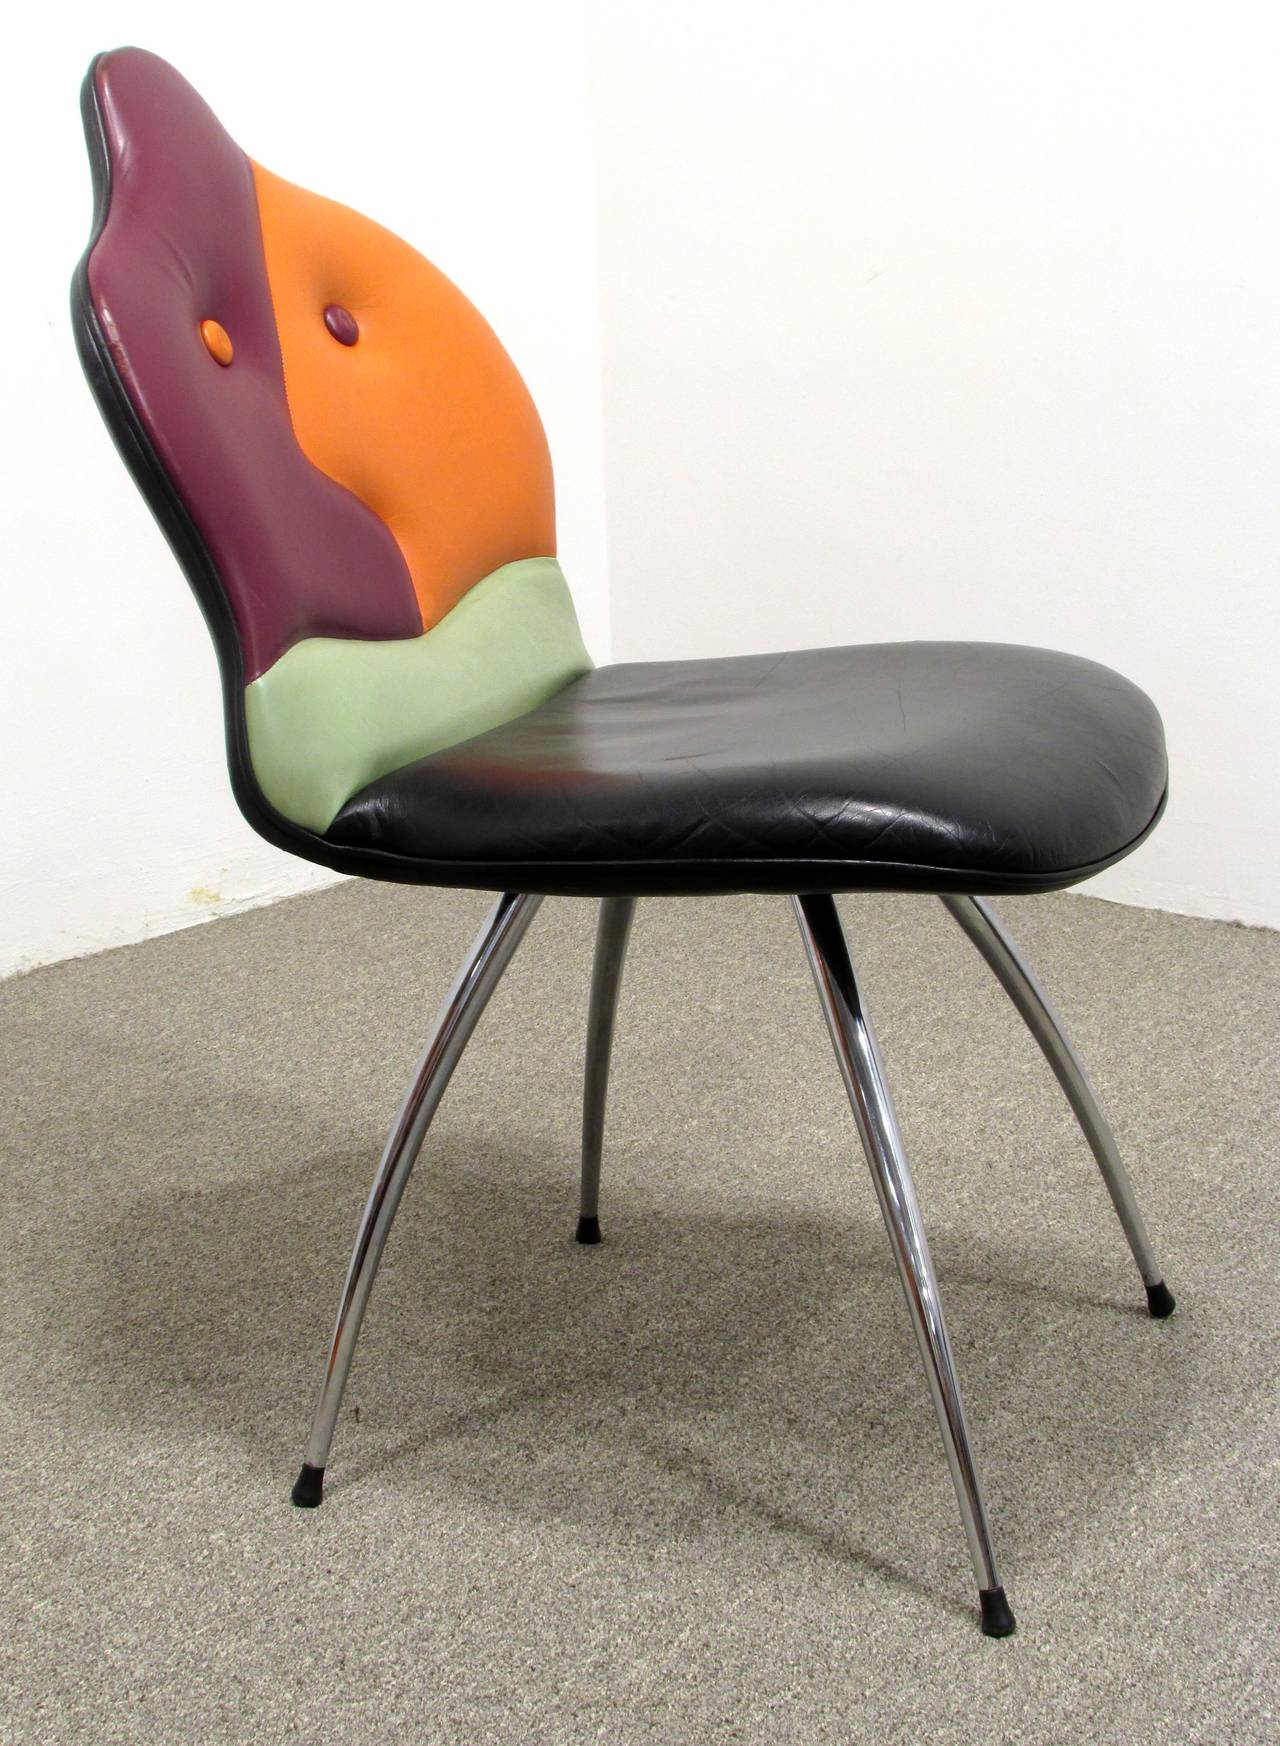 Metalwork Pop Art Chair For Sale